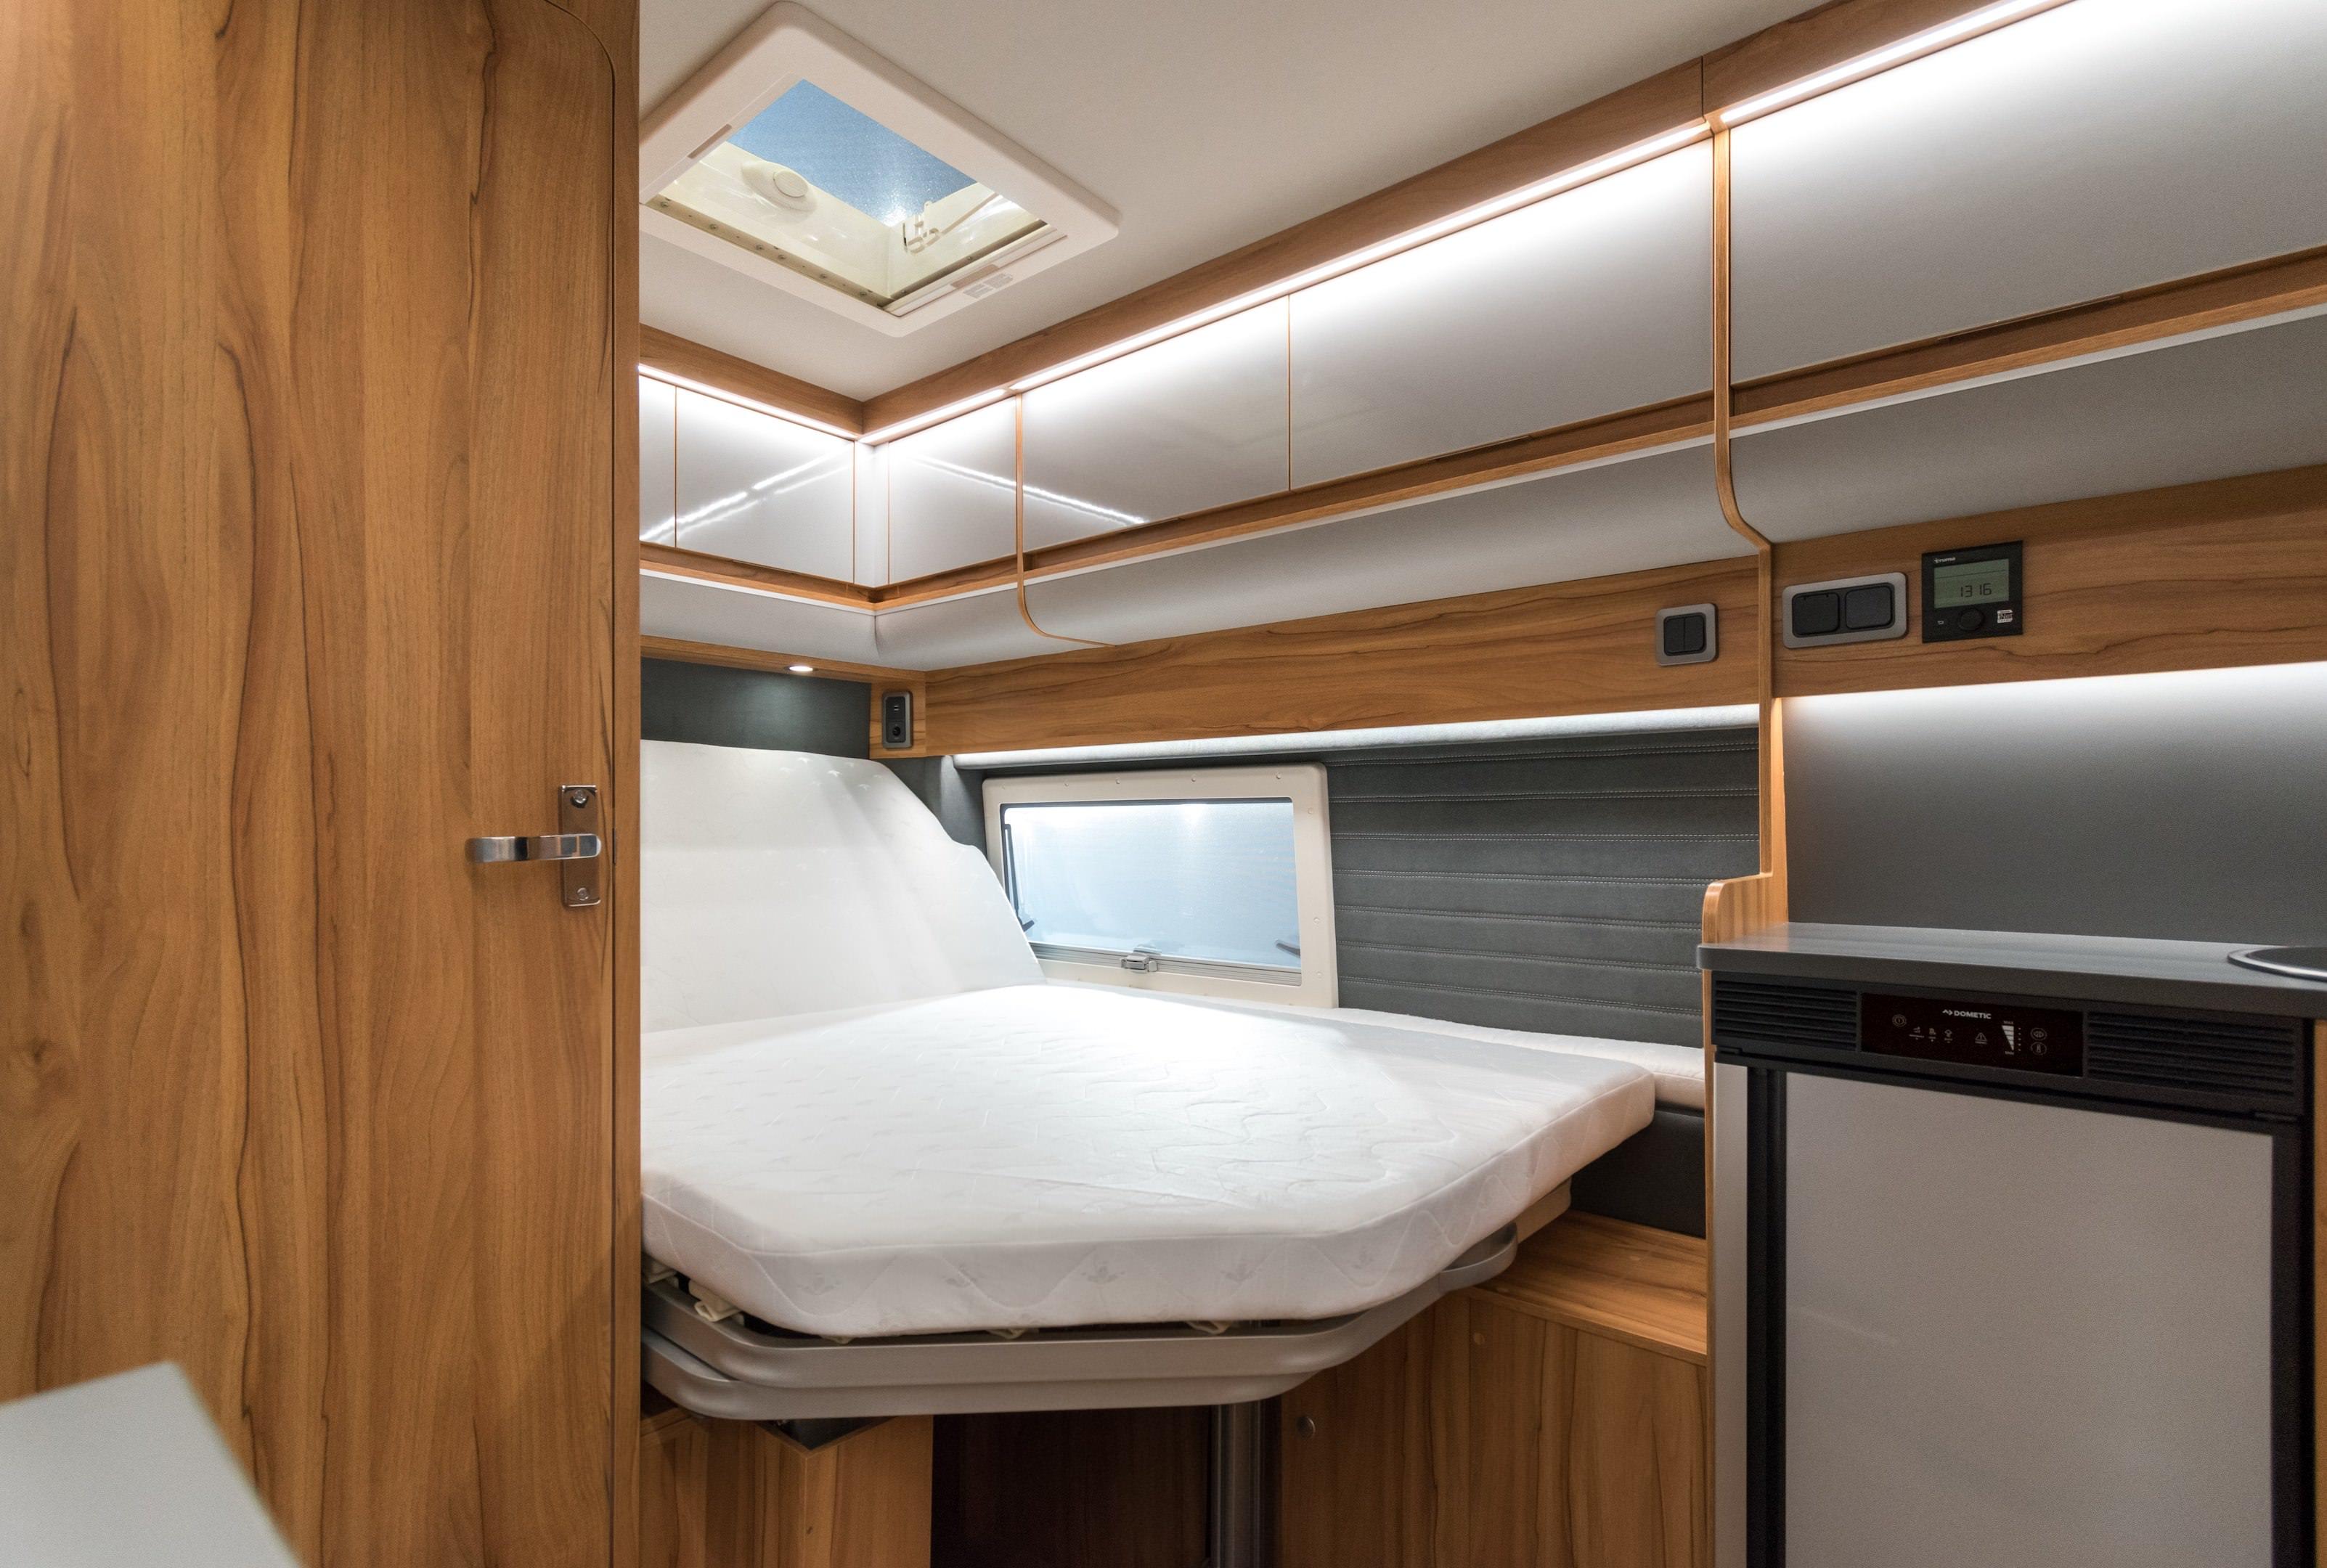 Affinity RV – campervan klasy premium – zdjęcie 1